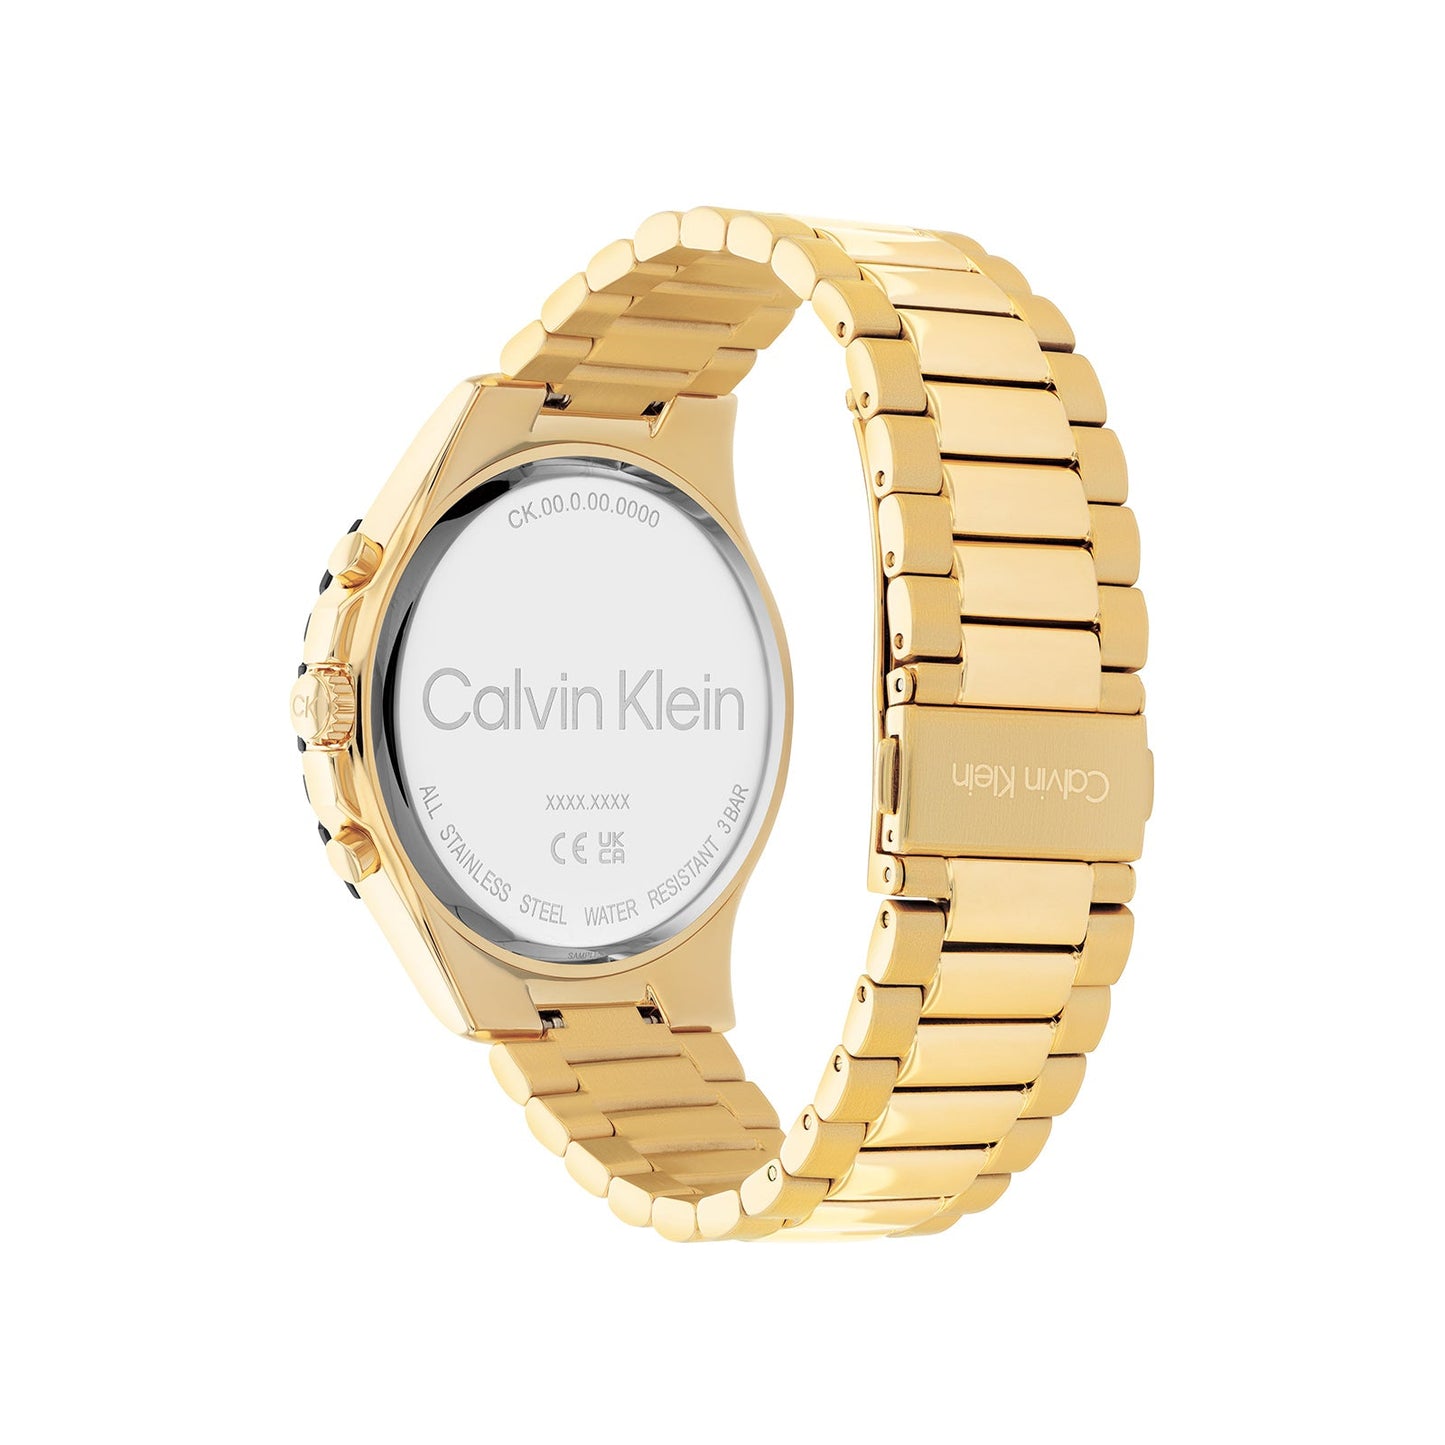 Calvin Klein 25200116 Men's Steel Watch